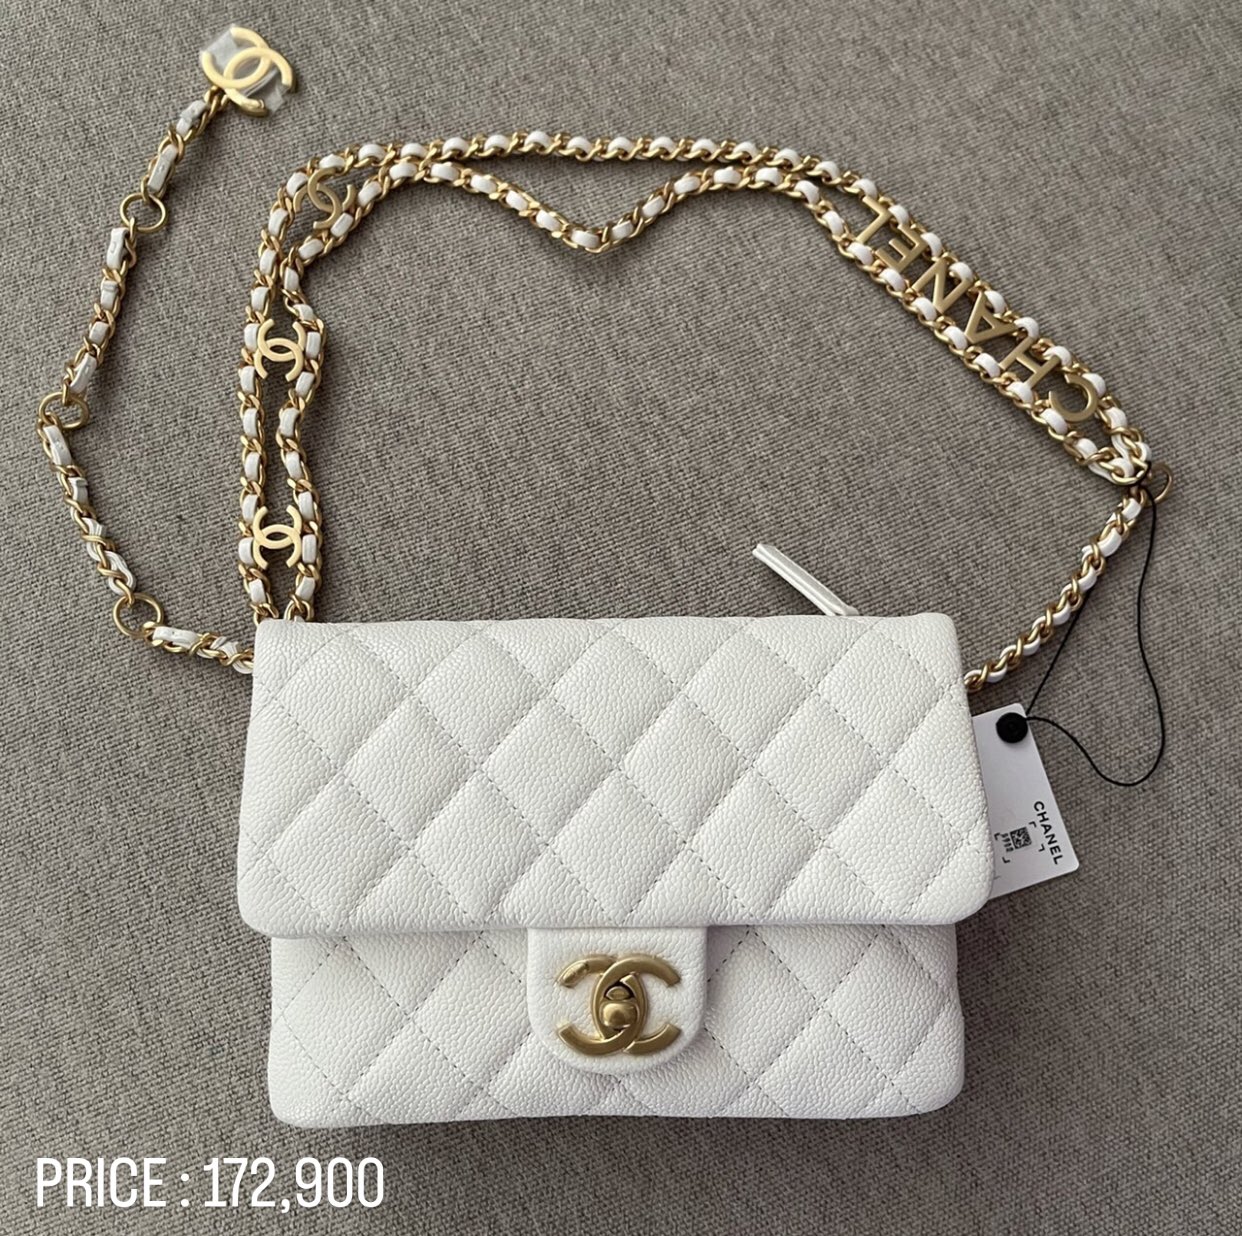 Cypitemauthentic on X: New Chanel Belt Bag White 7 Full set ❌ใส่ Promax  ไม่ได้❌ 🤍🤍172,900 #กระเป๋าแบรนด์เนม #กระเป๋าแบรนด์ #กระเป๋าชาแนล #กระเป๋า chanel #ชาแนล #ชาแนลแท้ #chanel #chanelbag #chanelthailand  #chanelbagthailand #chanelแท้